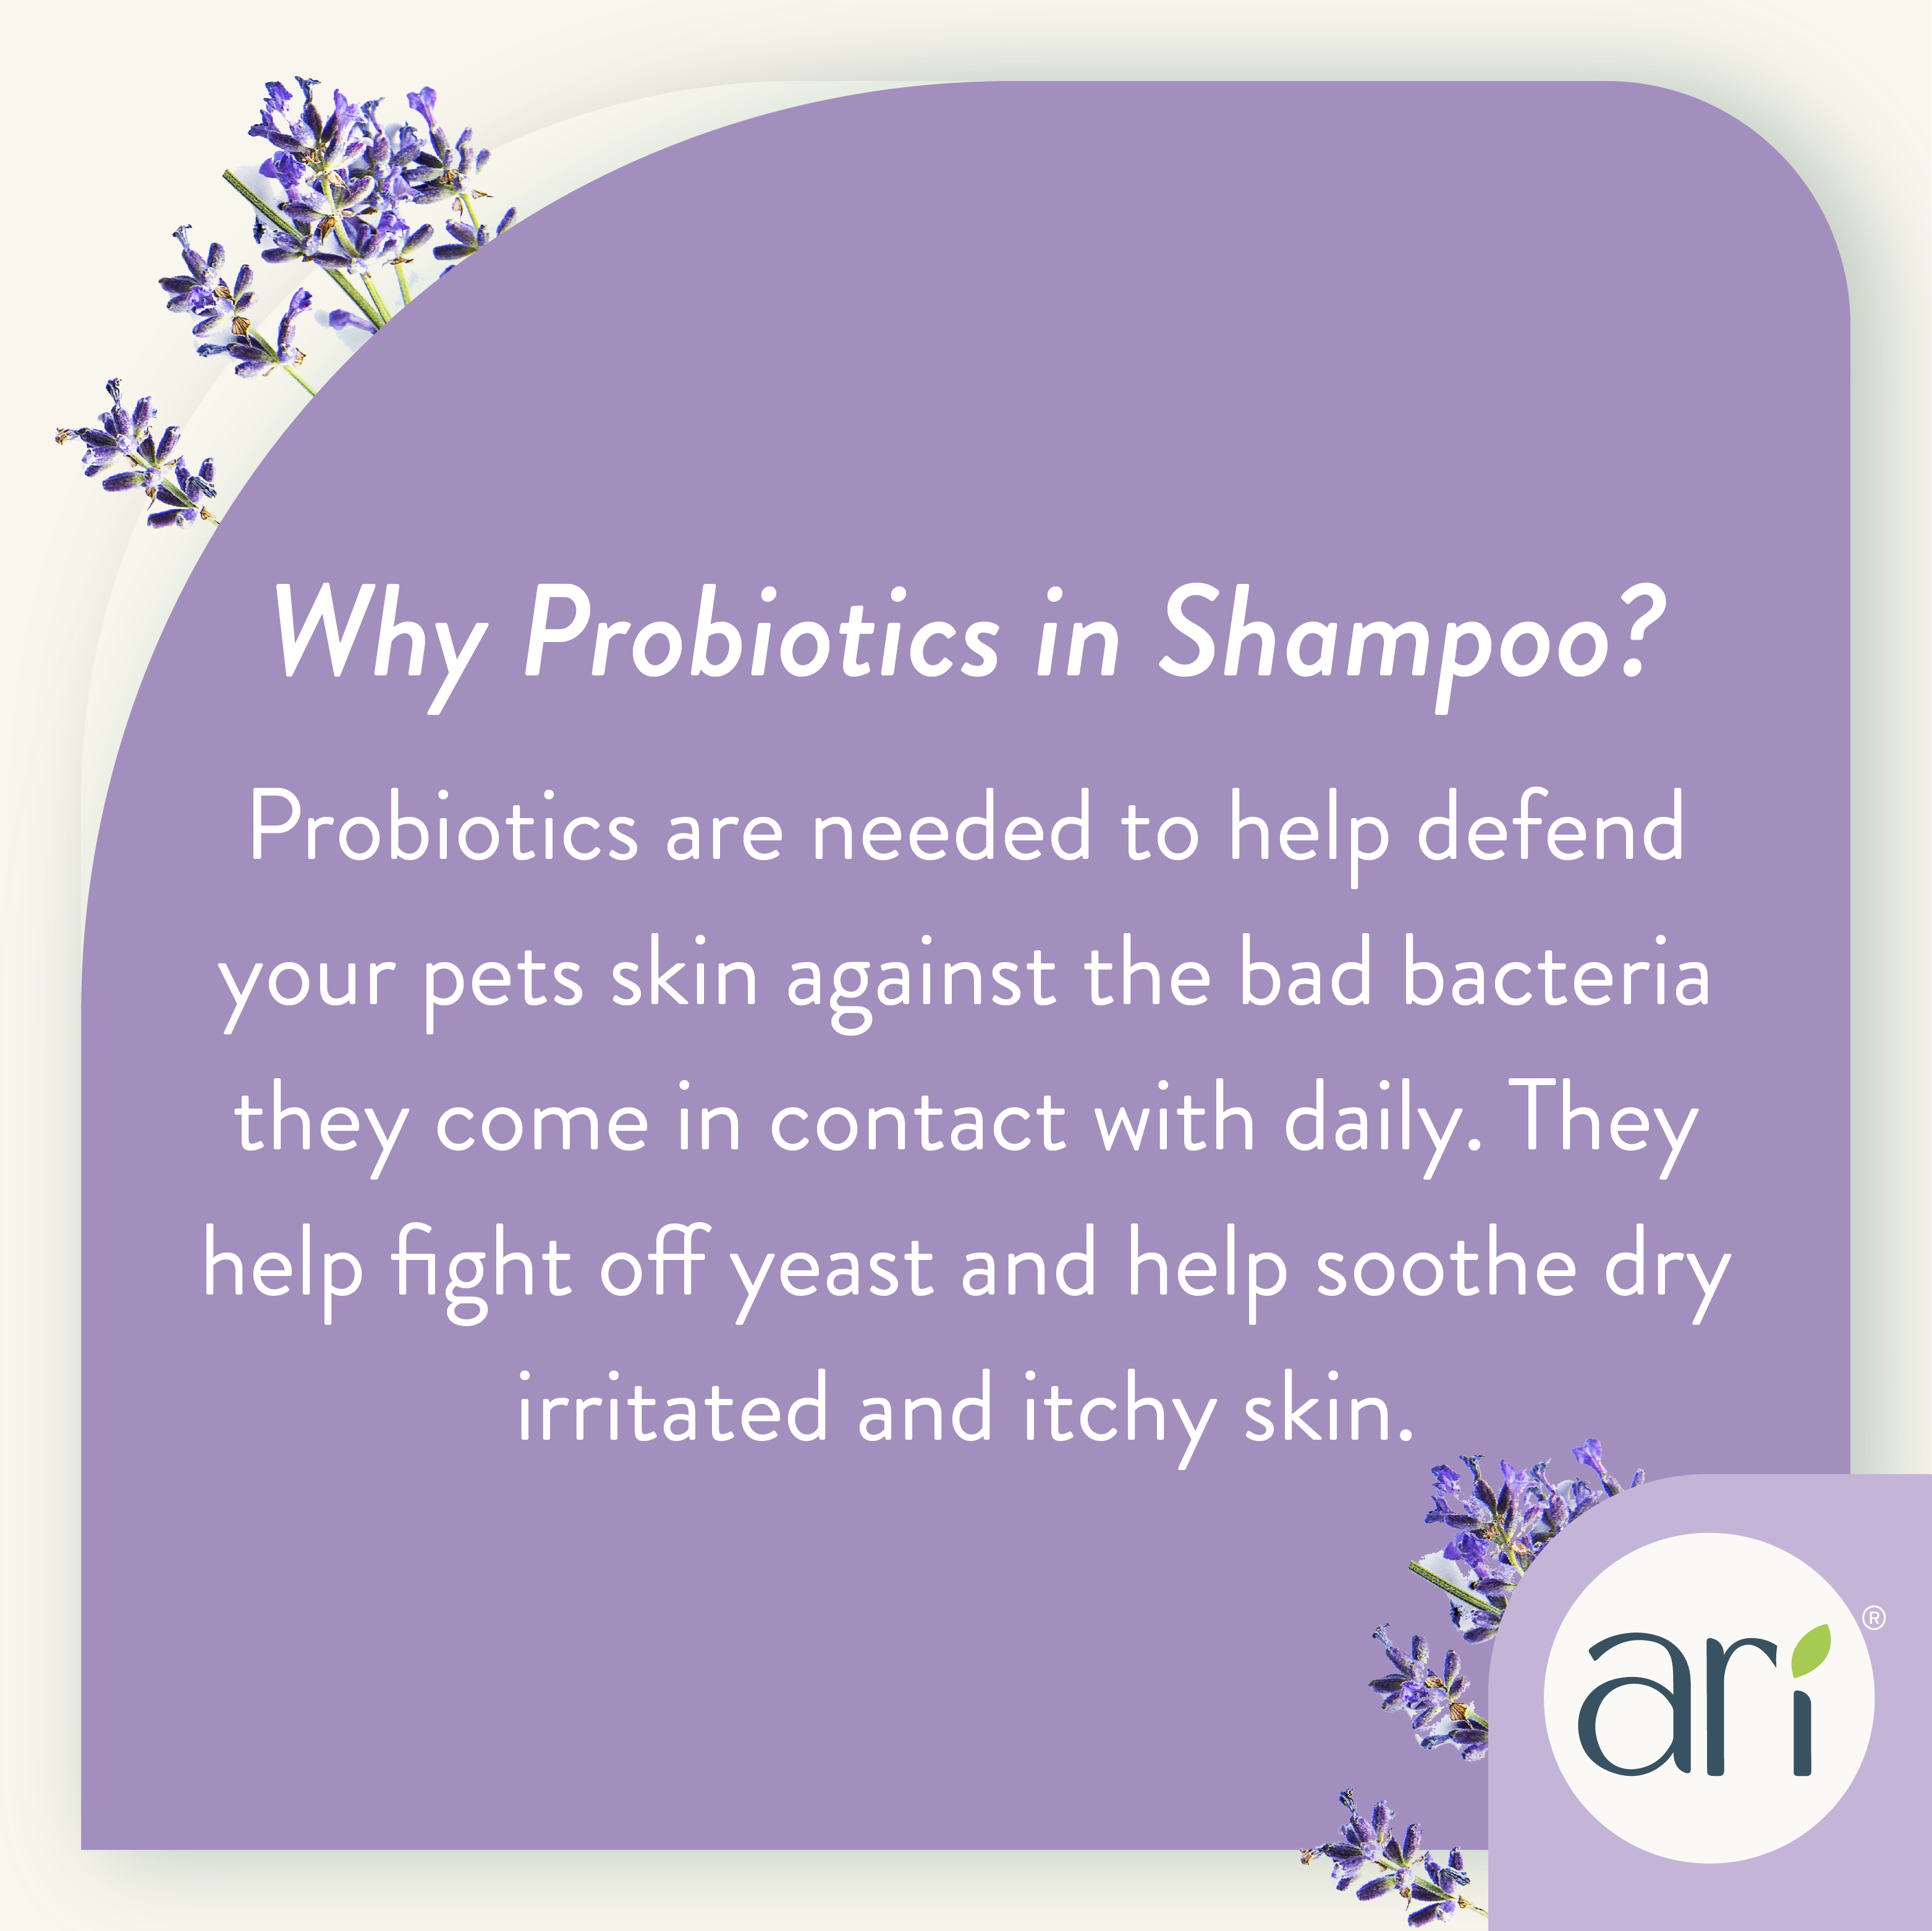 ARI Probiotic Sensitive Skin Shampoo